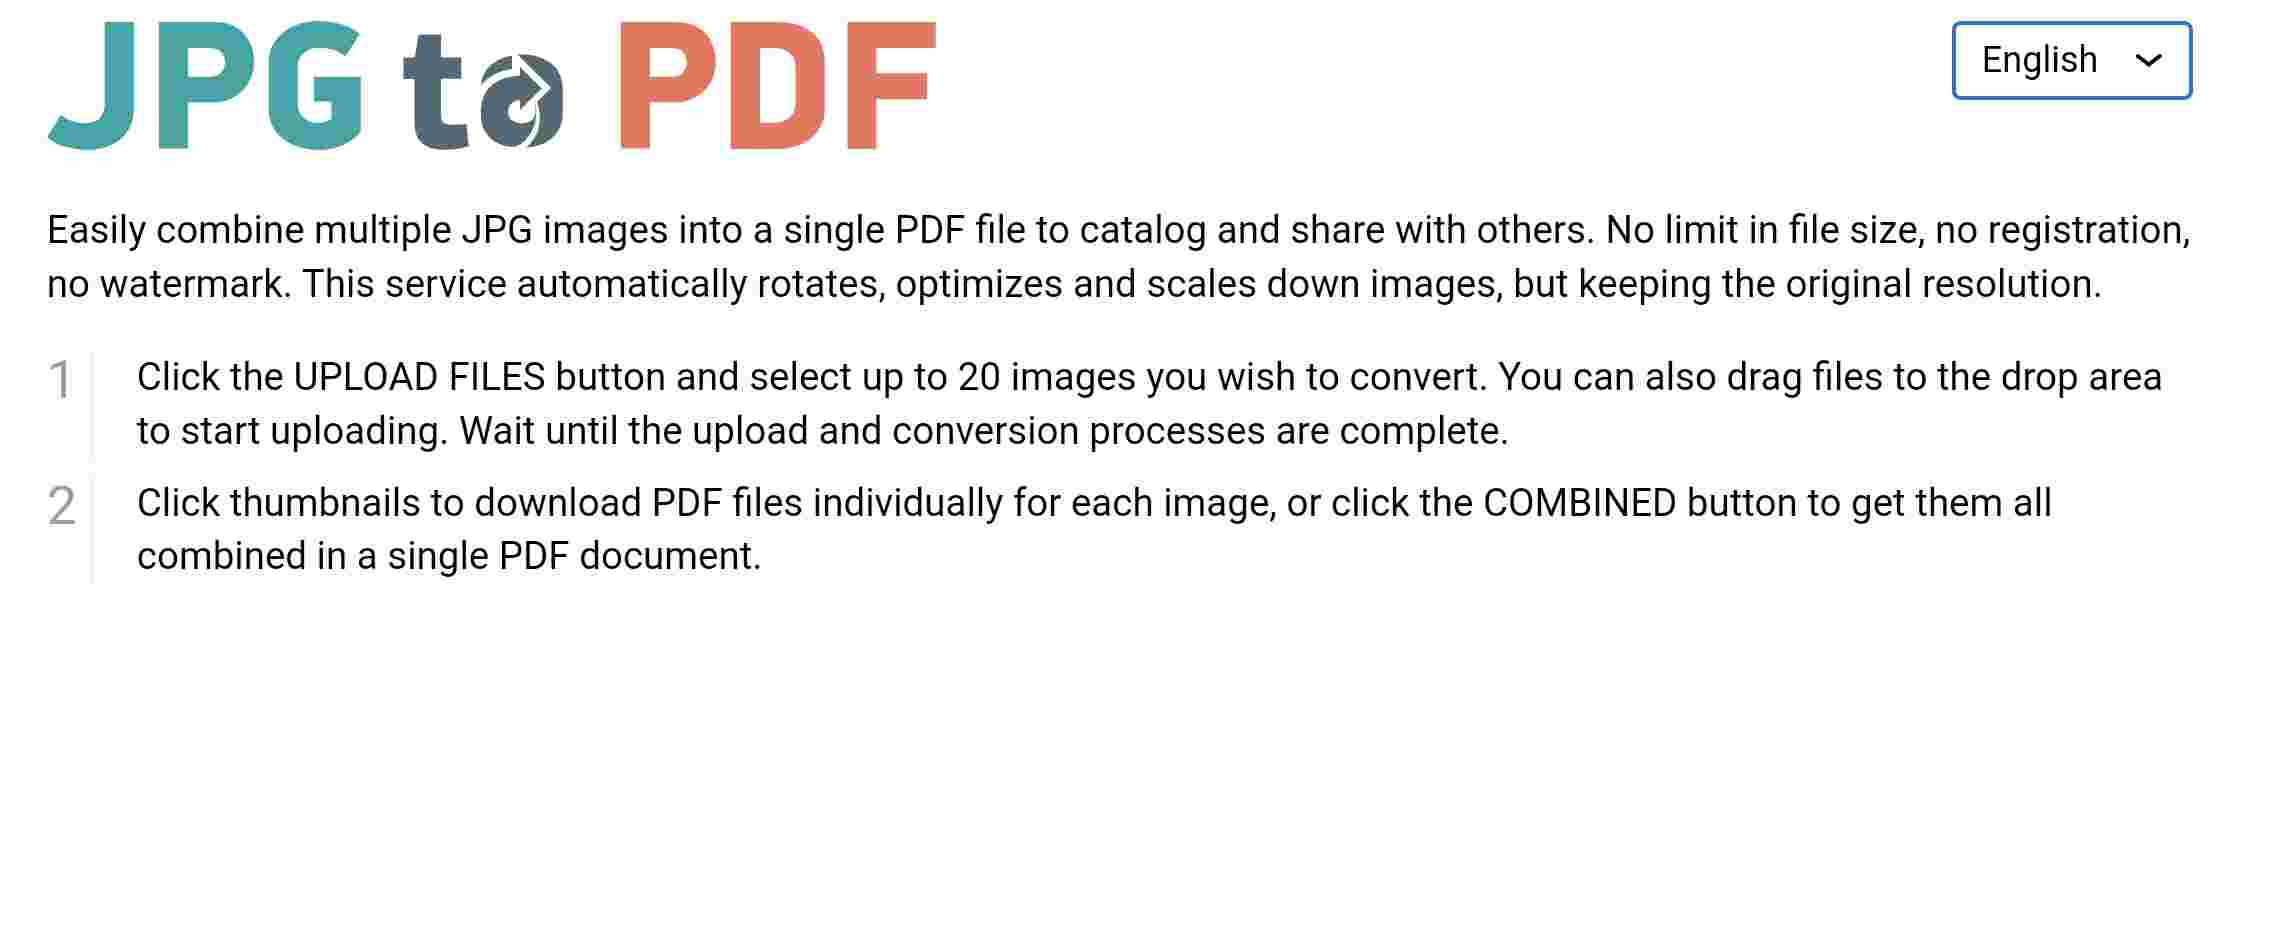 JPG2PDF - JPG to PDF Converter